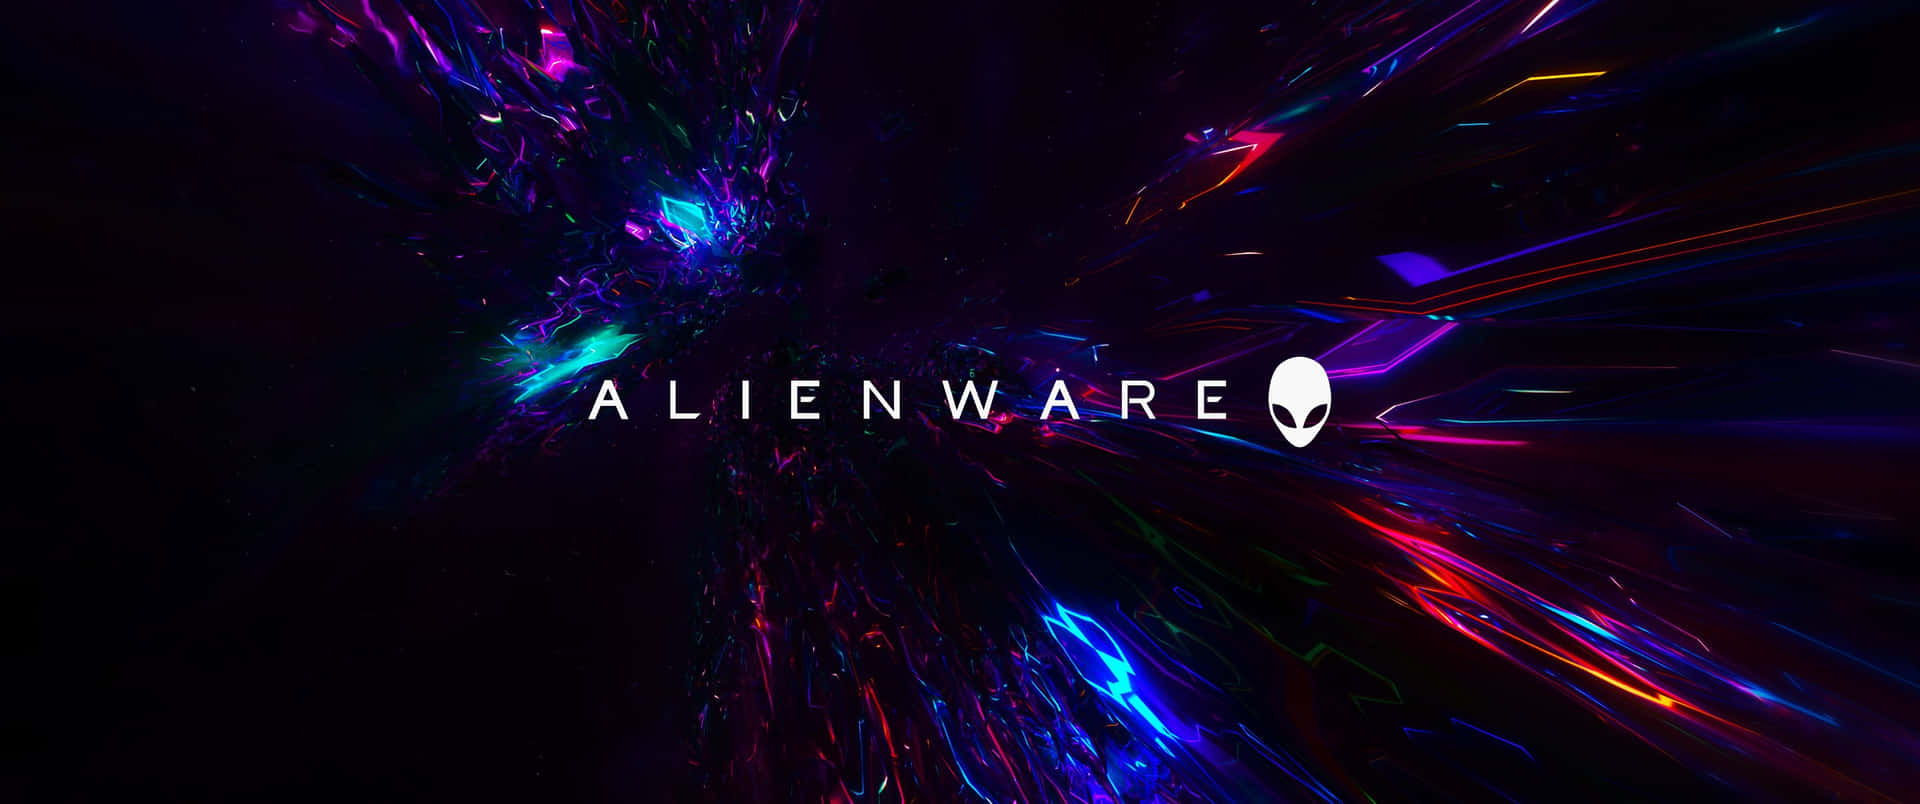 3440x1440p Alienware Motion Blur Background